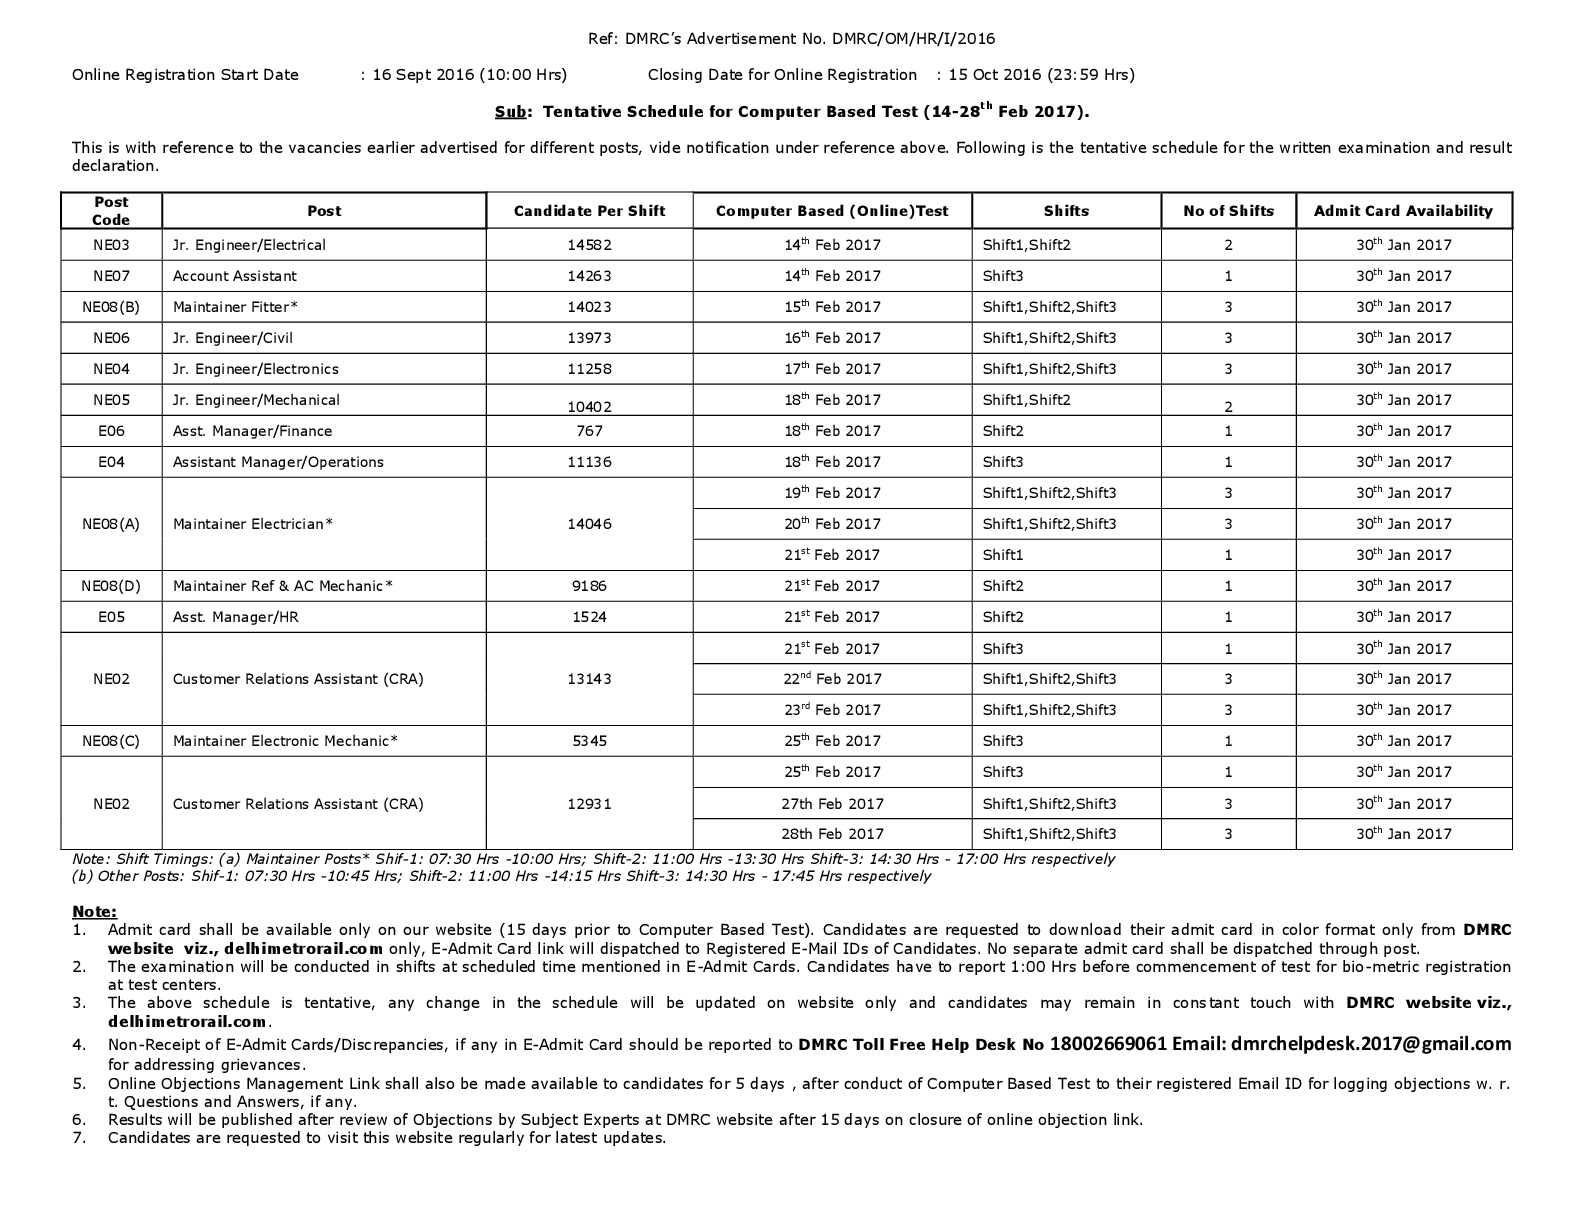 DMRC 2016 RECRUITMENT Schedule for Computer